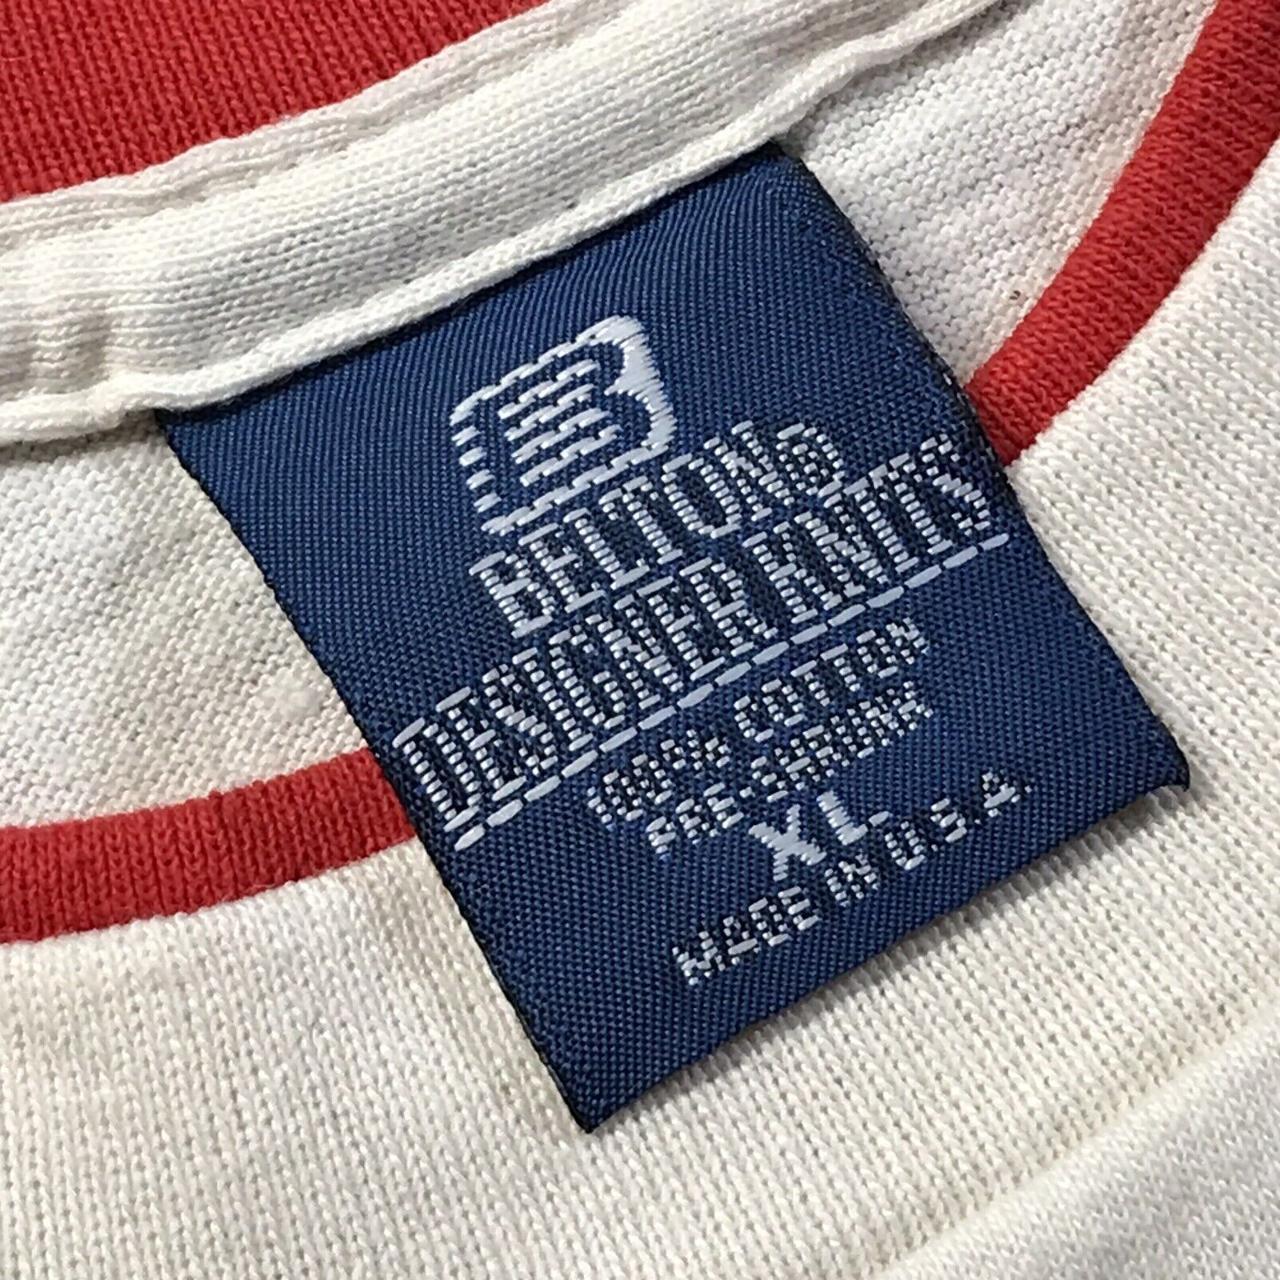 Vintage Philadelphia Phillies Shirt Darren Daulton - Depop